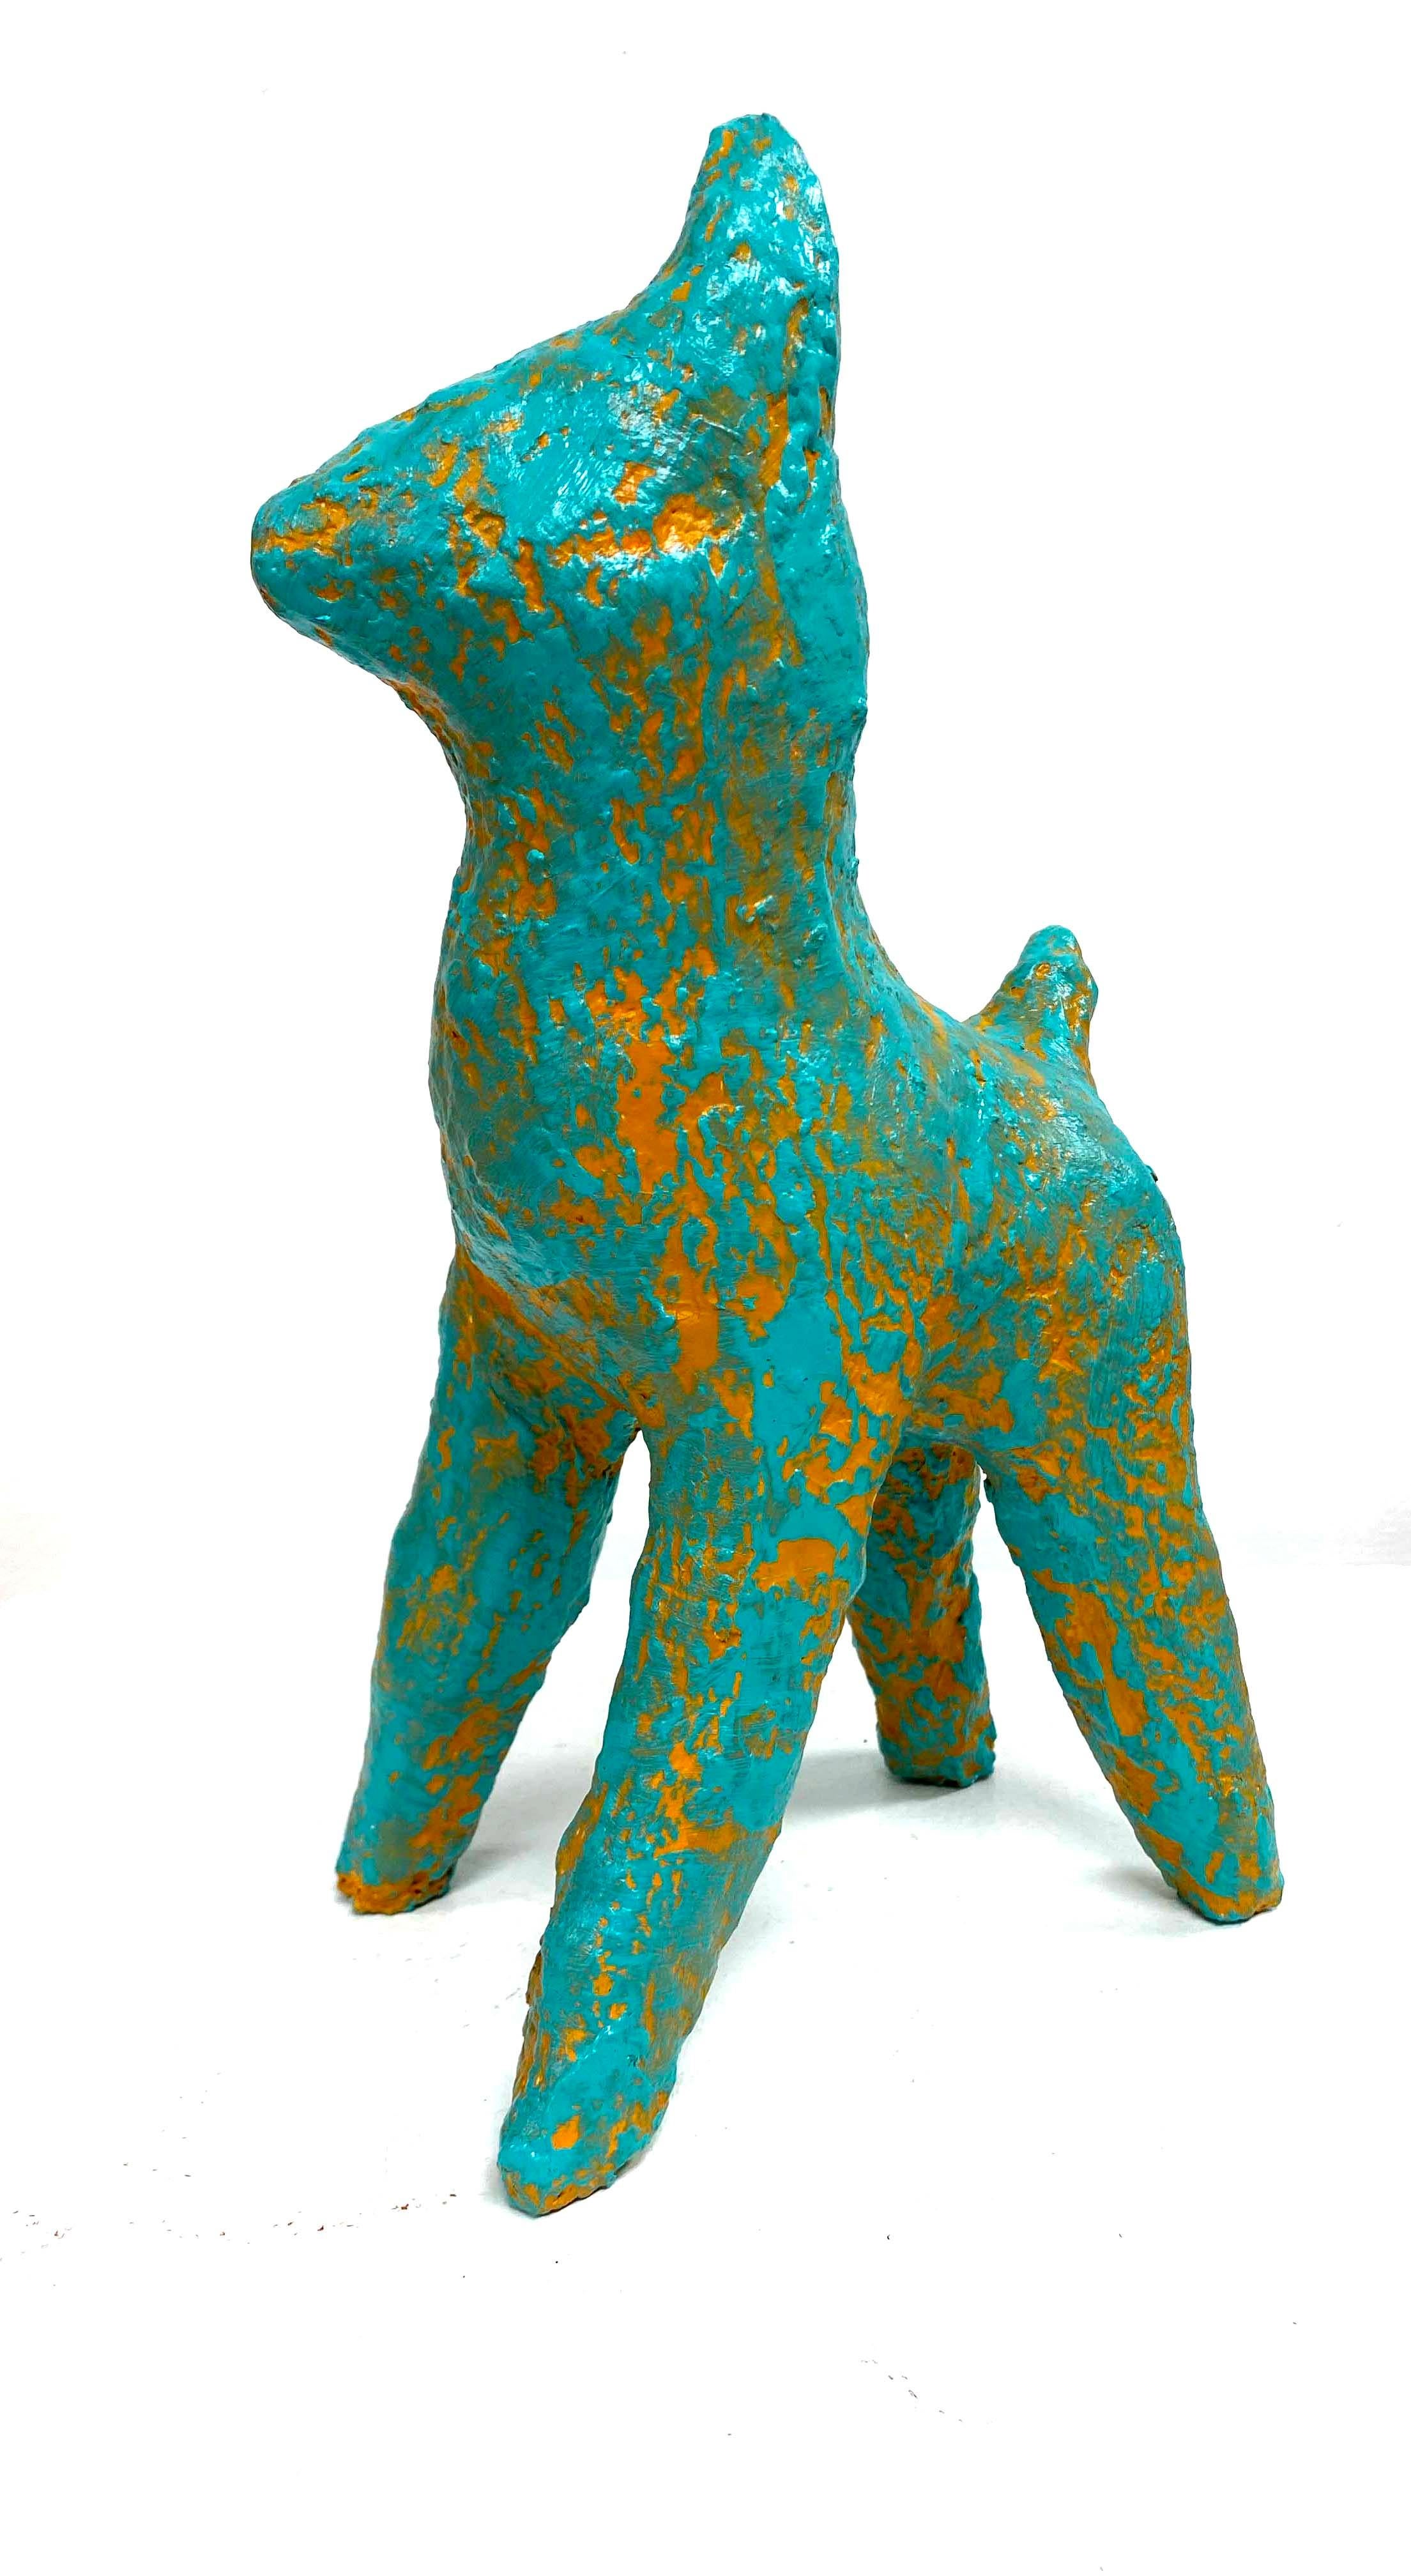 Polly Little Figurative Sculpture - Contemporary Sculpture Hybrid Animal Bright Blue Orange Plaster Acrylic 